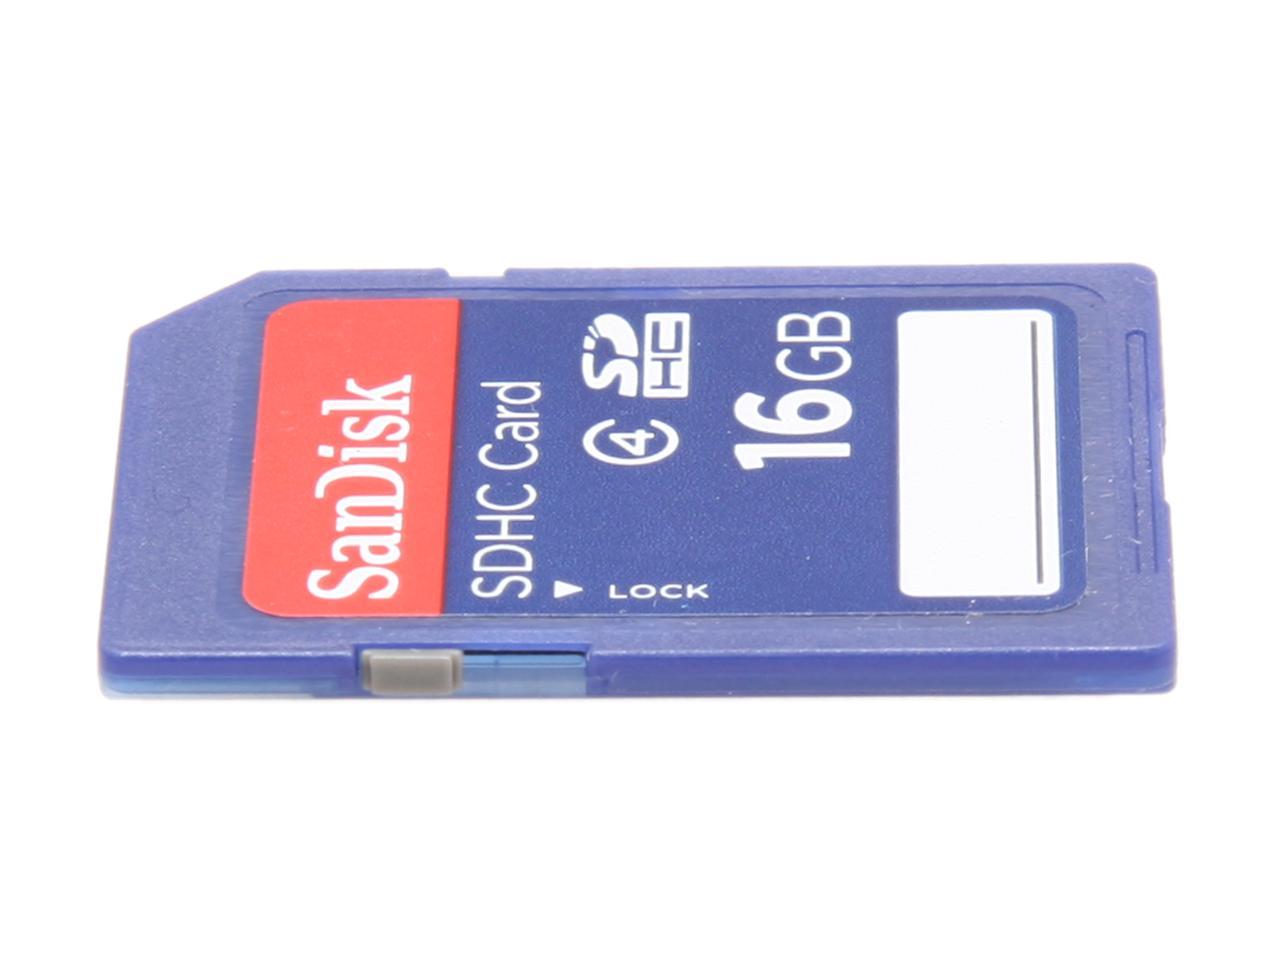 SanDisk 16GB Secure Digital High-Capacity (SDHC) Flash Card Model SDSDB-016G-B35